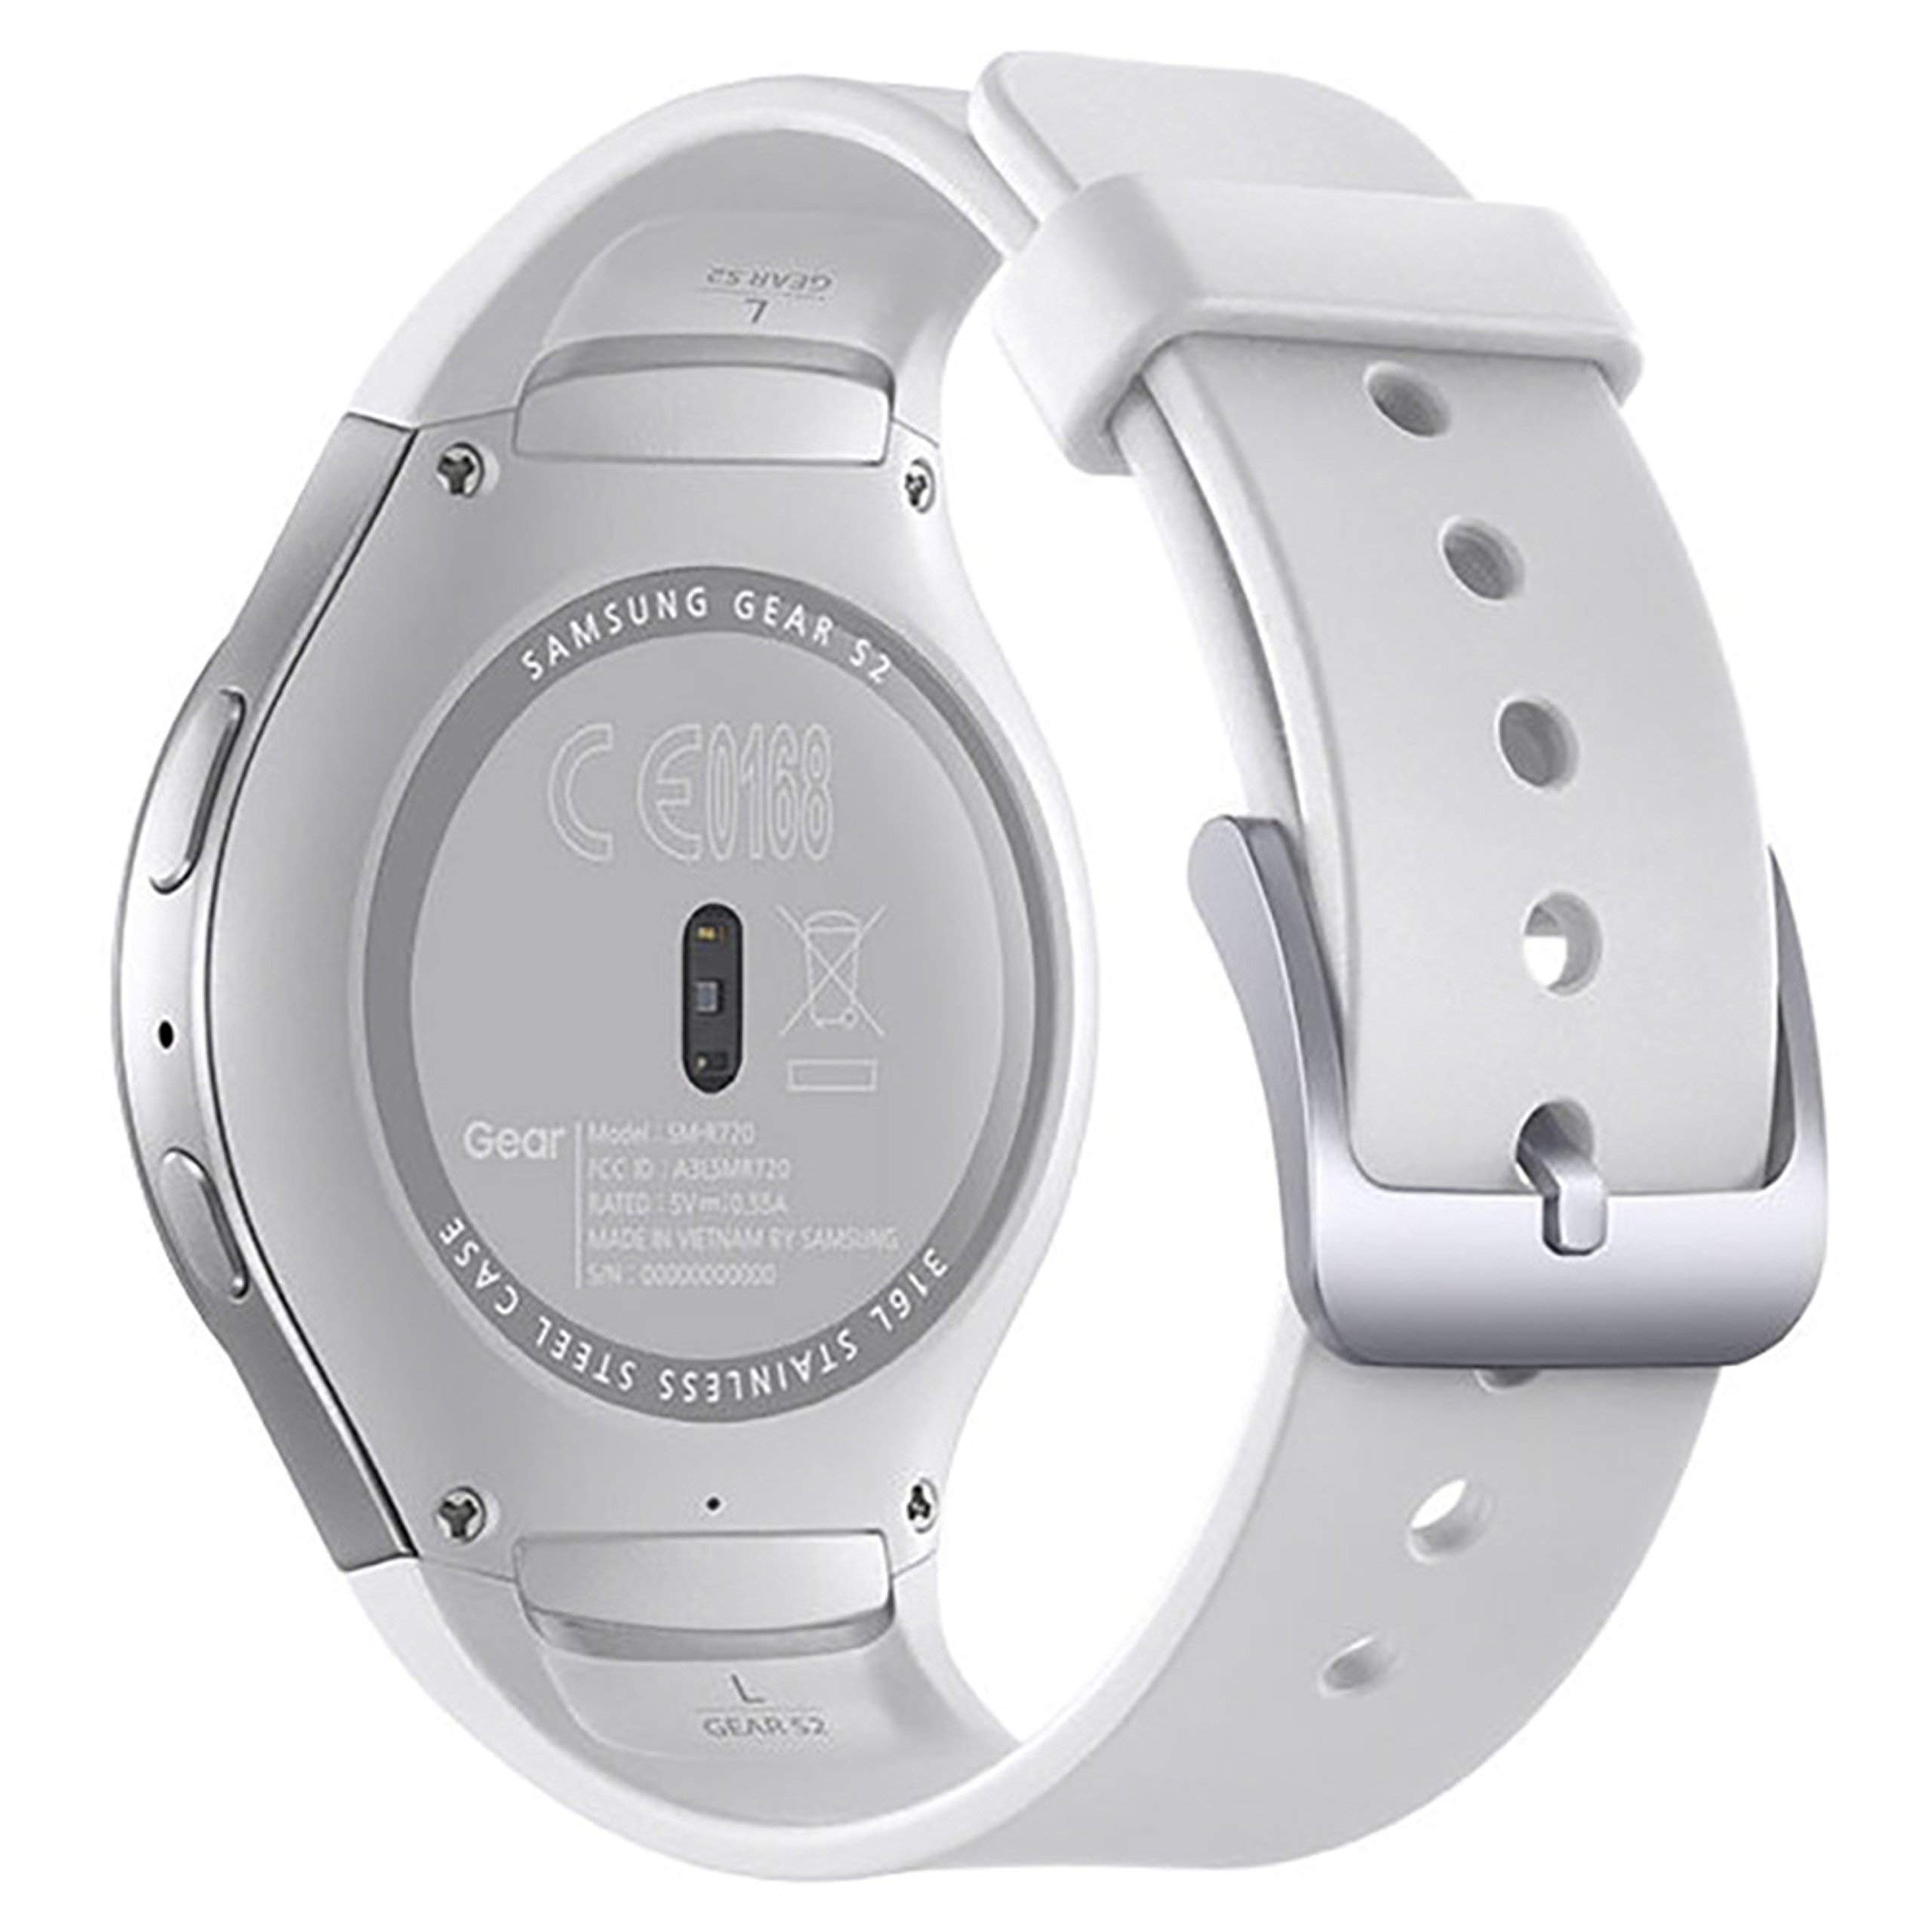 Samsung Gear S2 Smartwatch Silver (US Version) (Renewed)